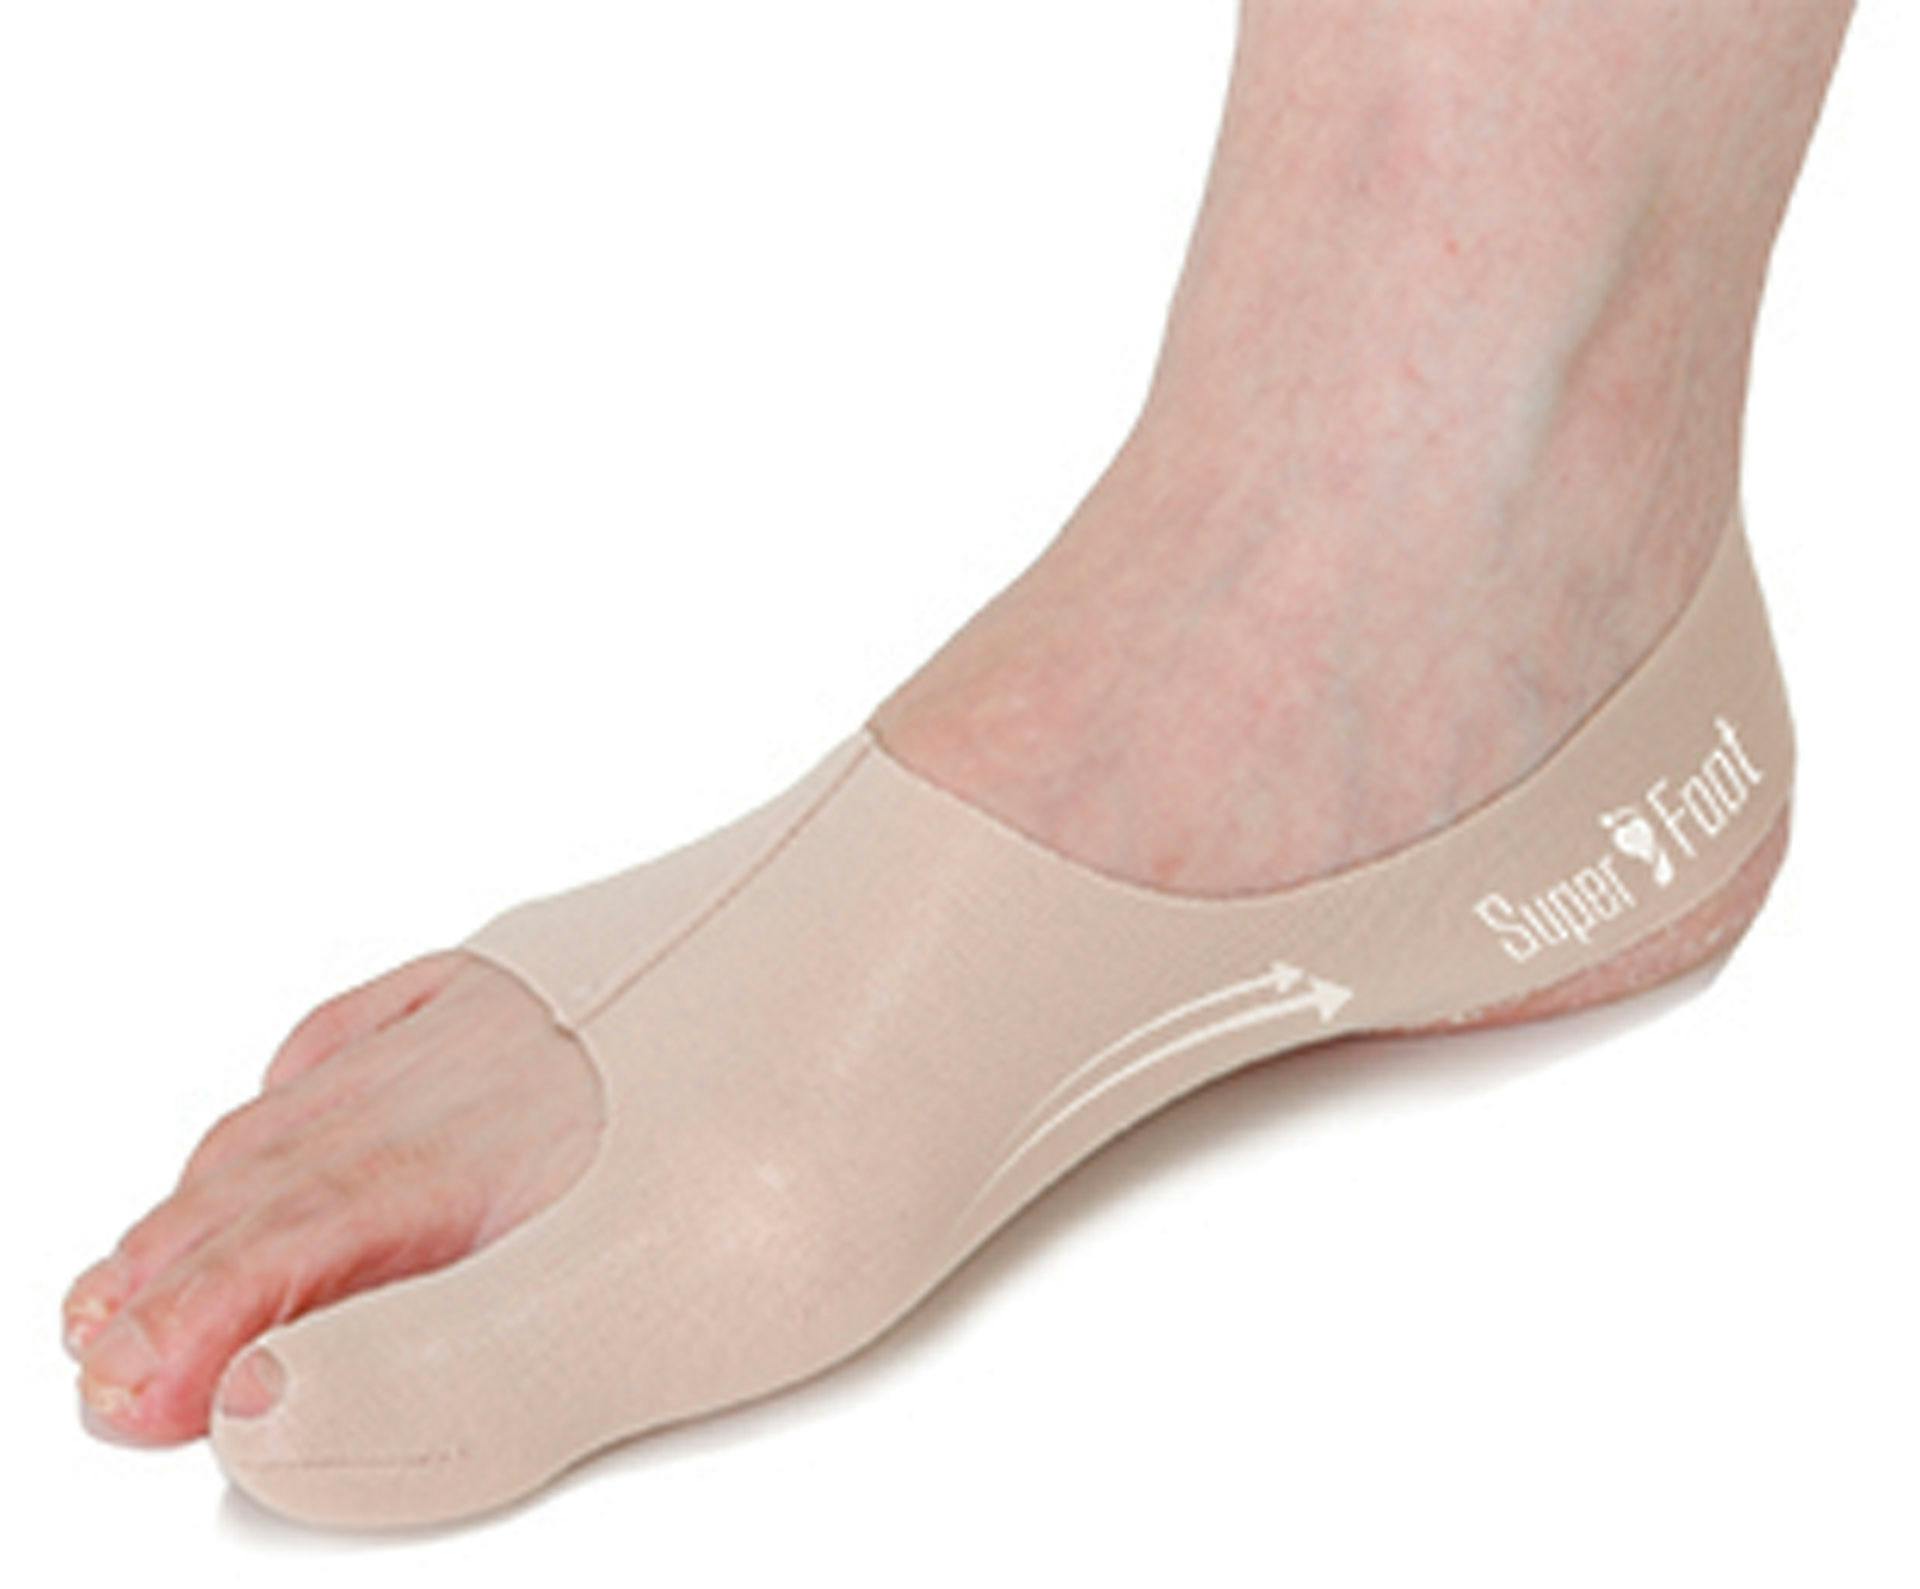  Super Foot Corrective Sock for Hallux Valgus (Bunion)  Small 1 Pair